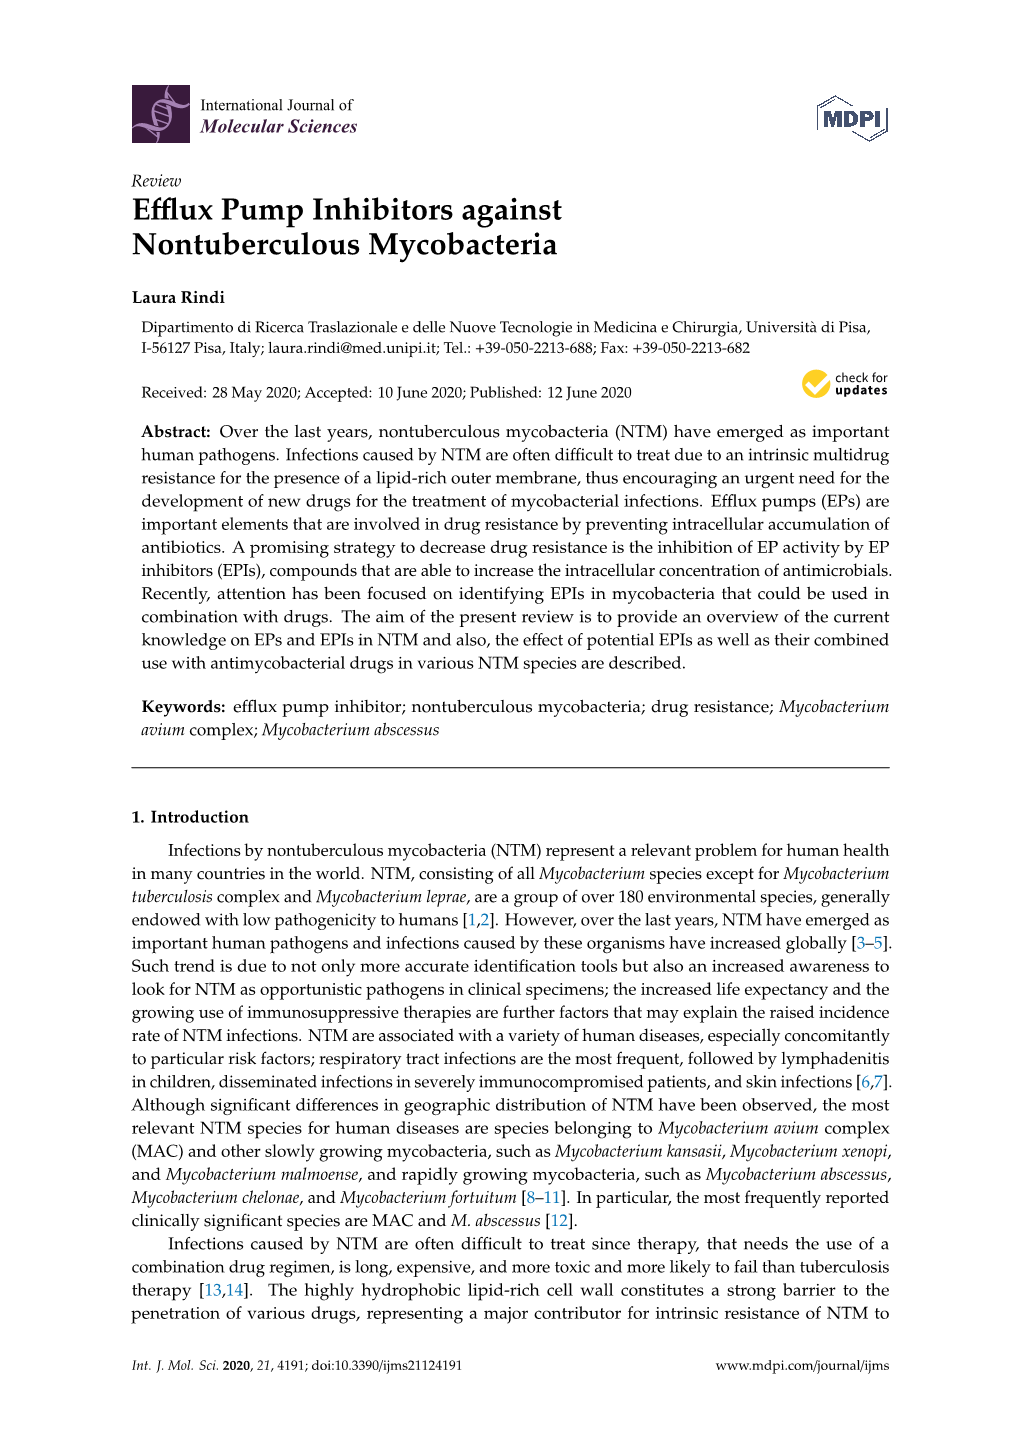 Efflux Pump Inhibitors Against Nontuberculous Mycobacteria